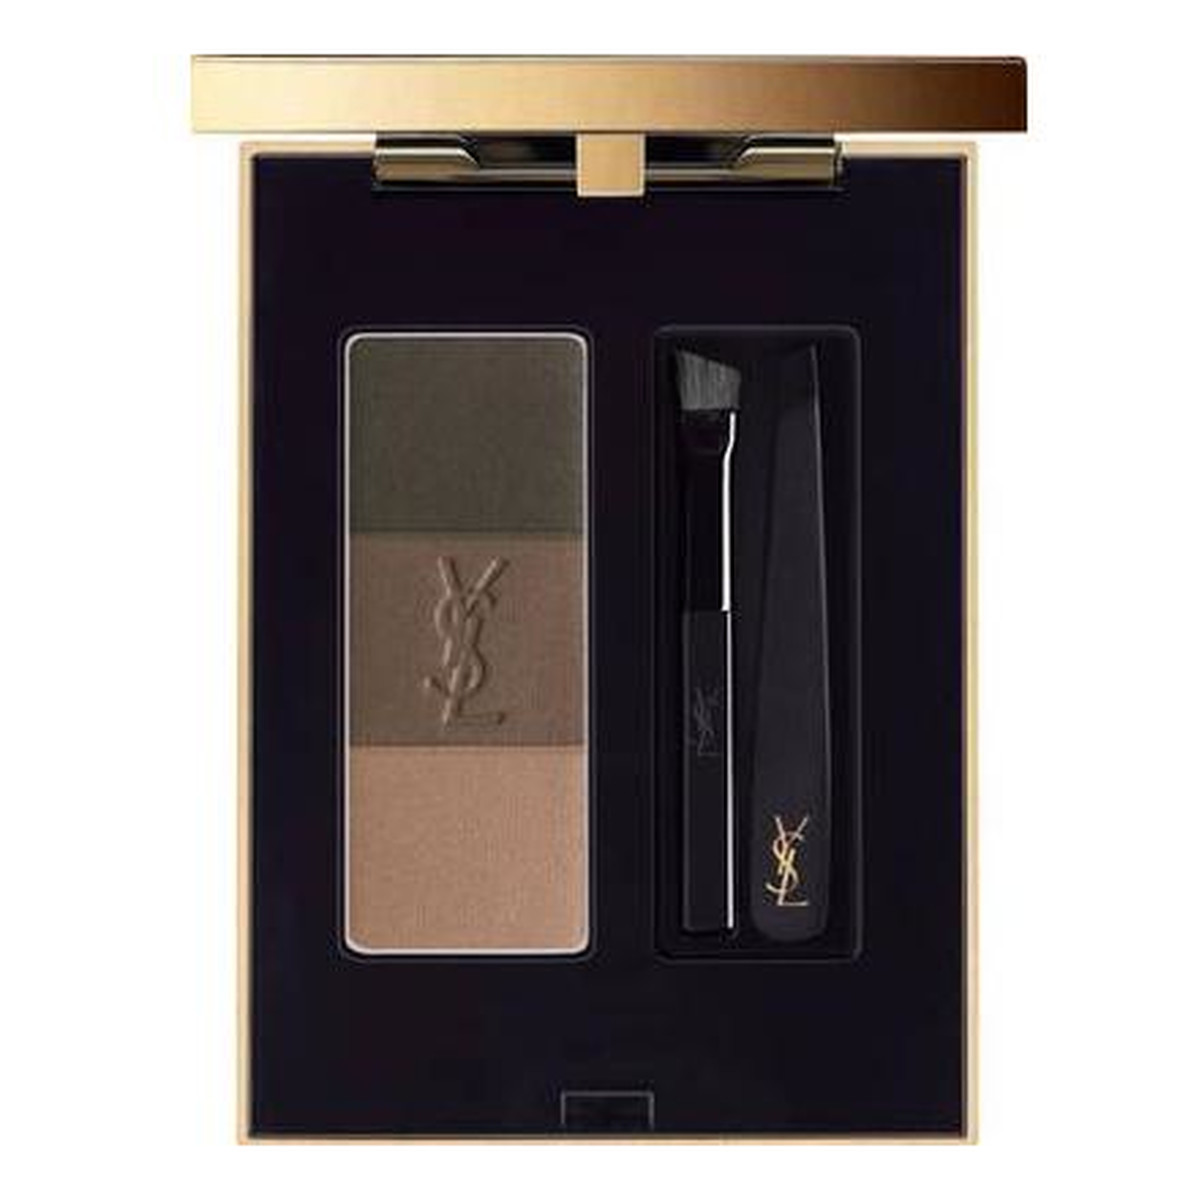 Yves Saint Laurent Couture Brow Palette Paleta cieni do brwi